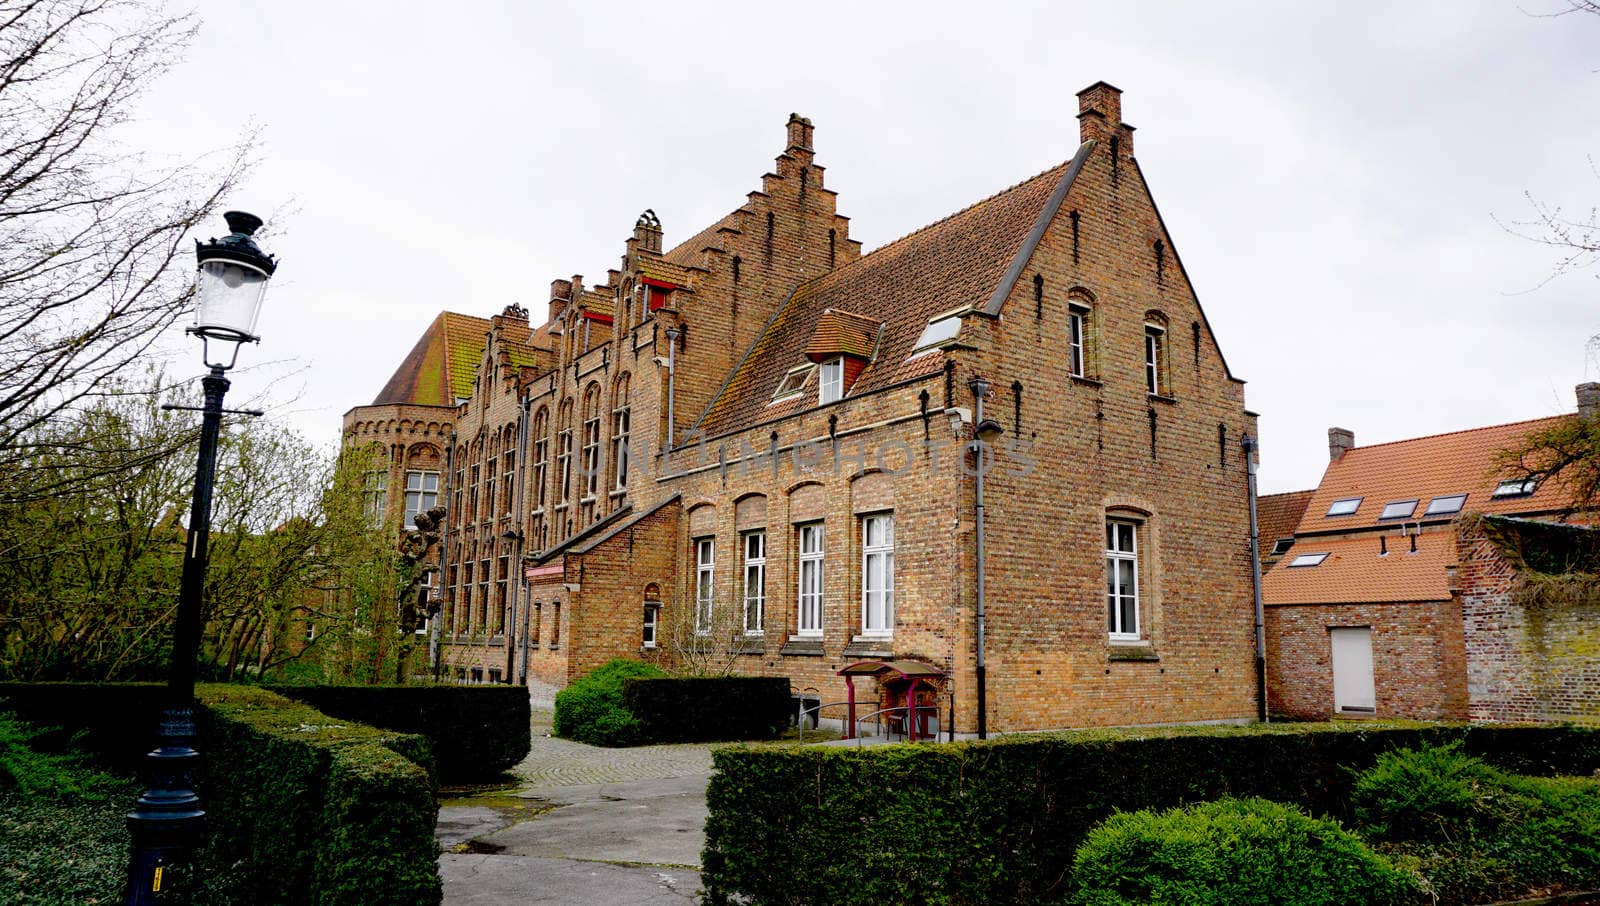 Historical building in Brugge Belgium by polarbearstudio